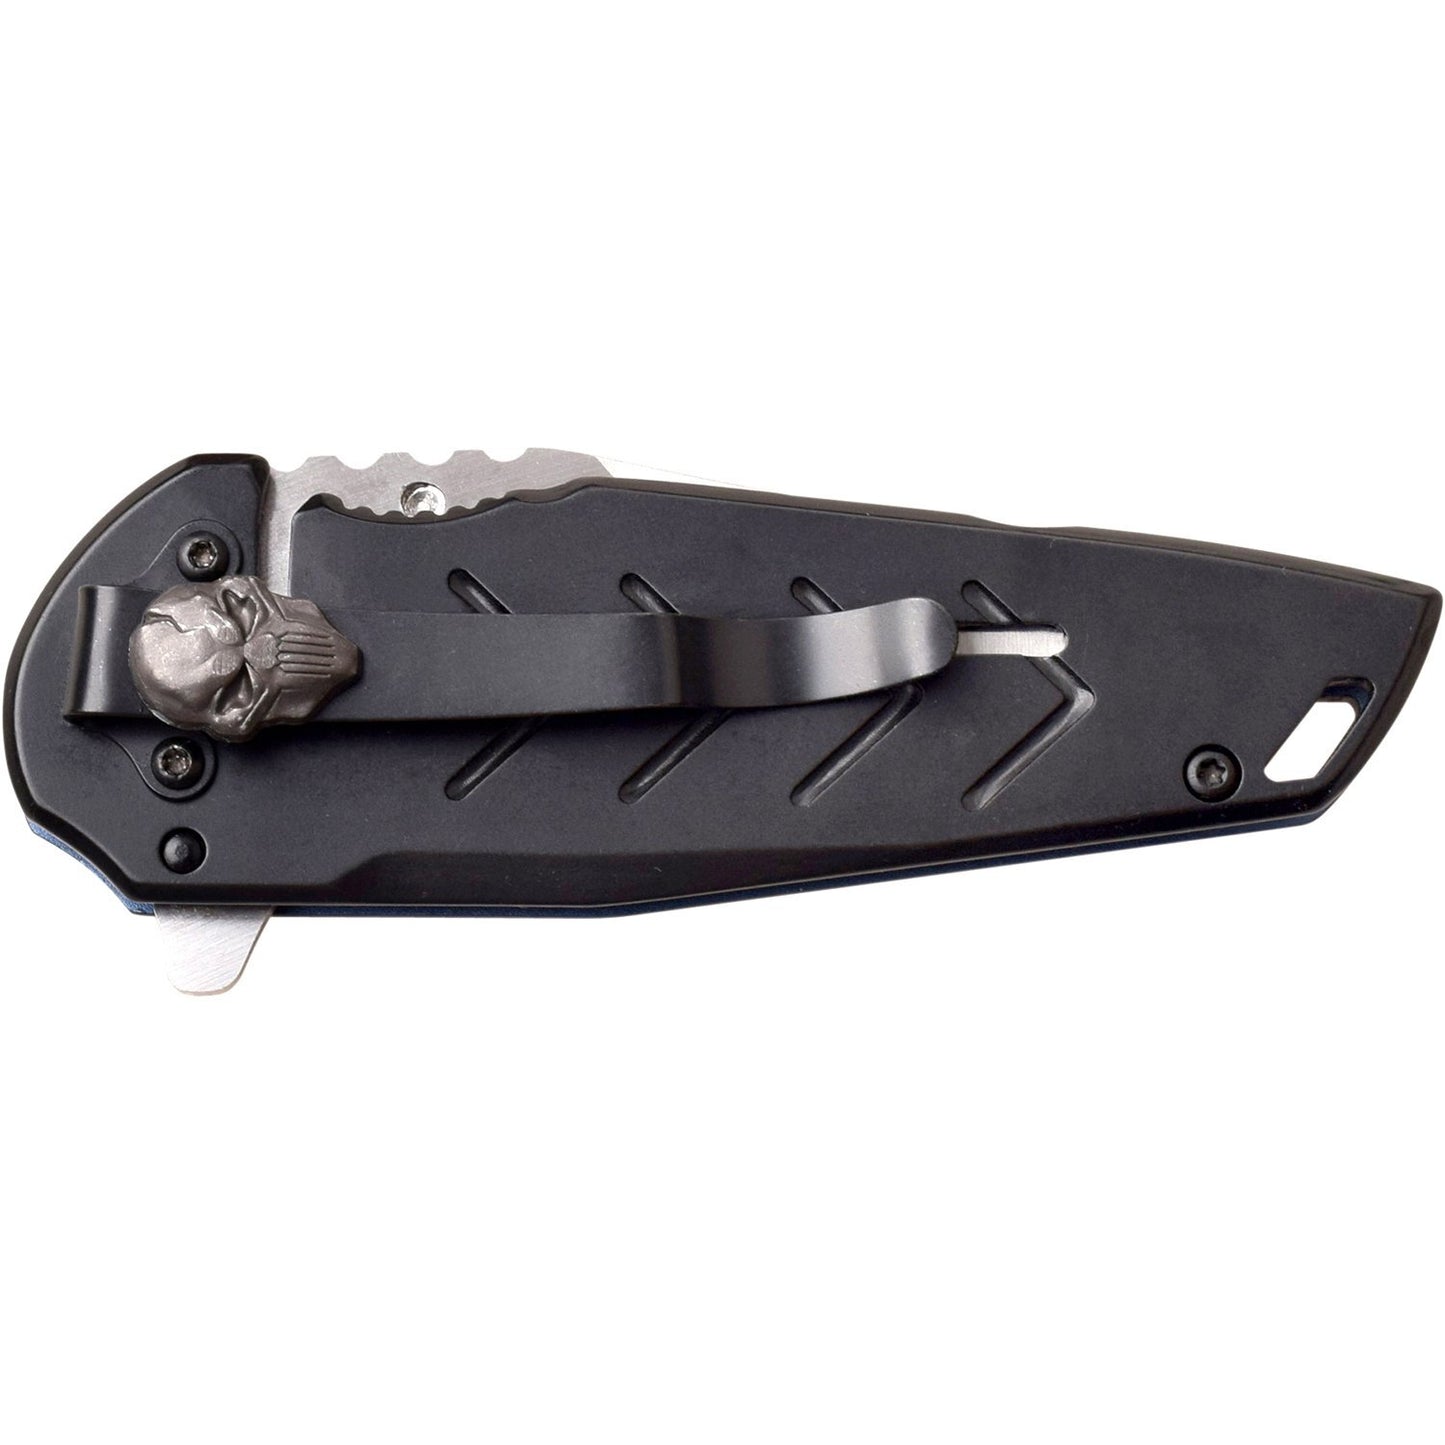 Tac-Force Tac-Force Tanto Tactical Folding Pocket Knife - Blue Ball Bearing Pivot #tf-974Bl Dark Slate Gray